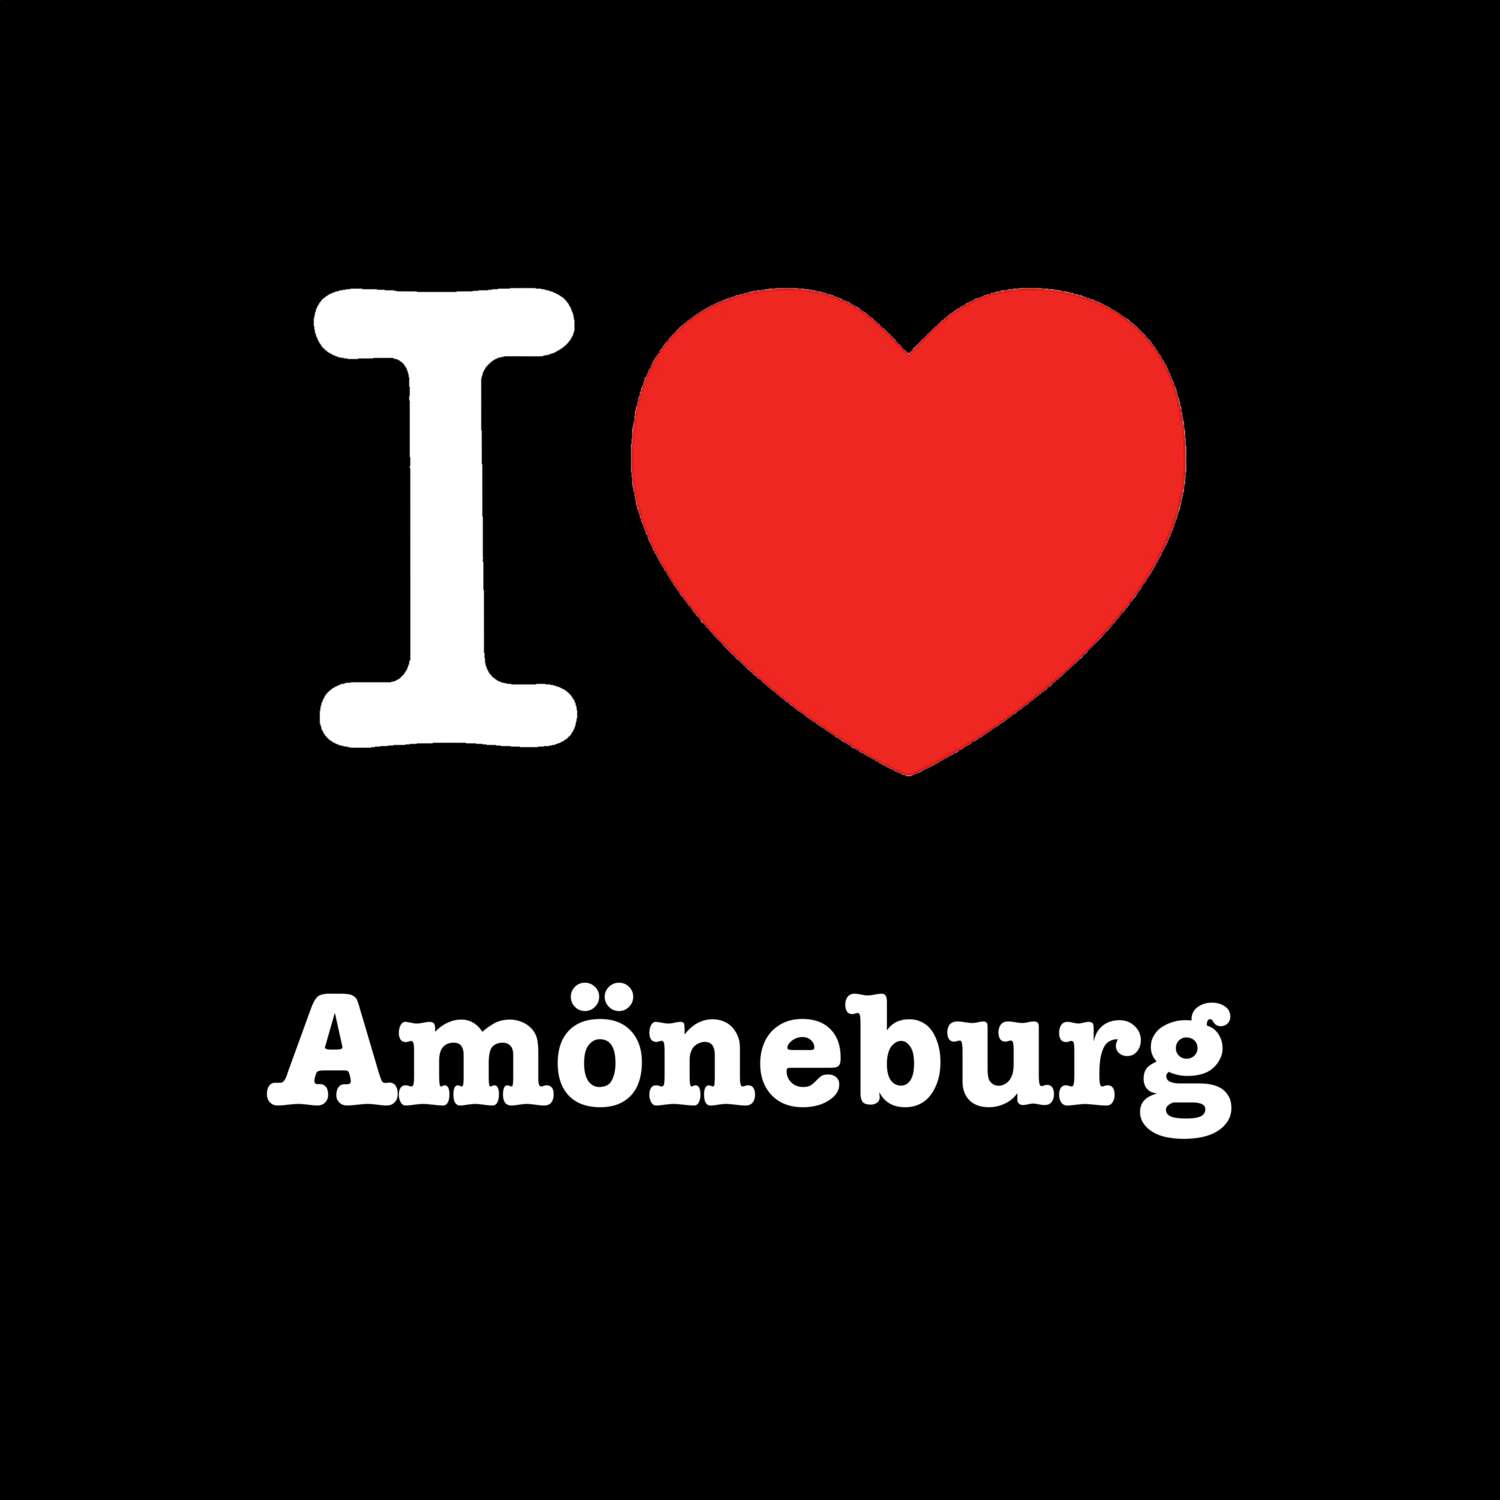 Amöneburg T-Shirt »I love«